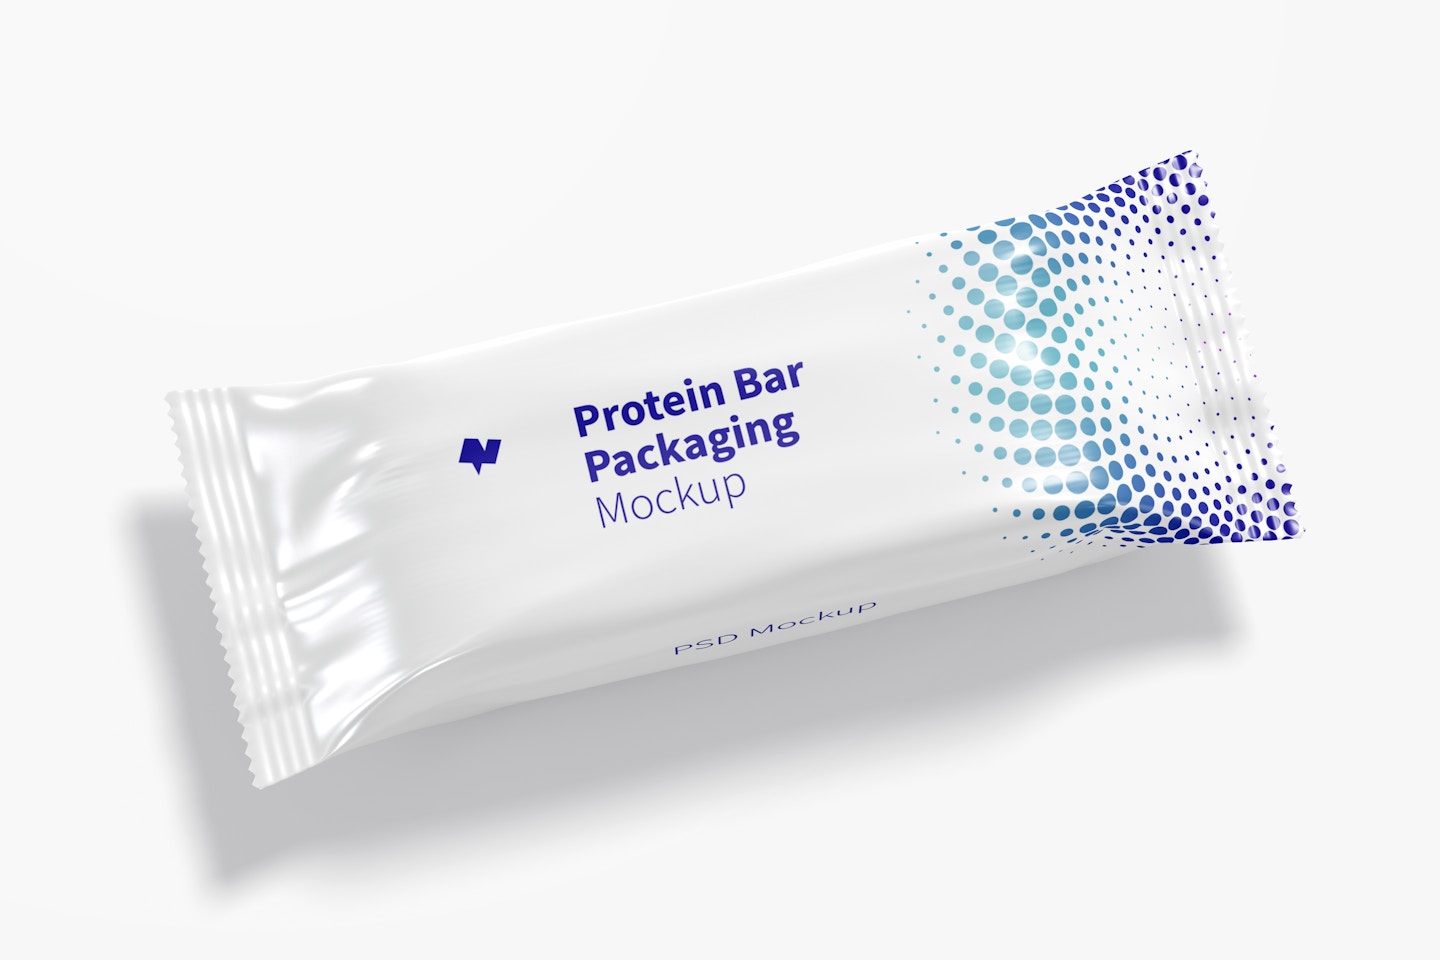 Protein Bar Packaging Mockup